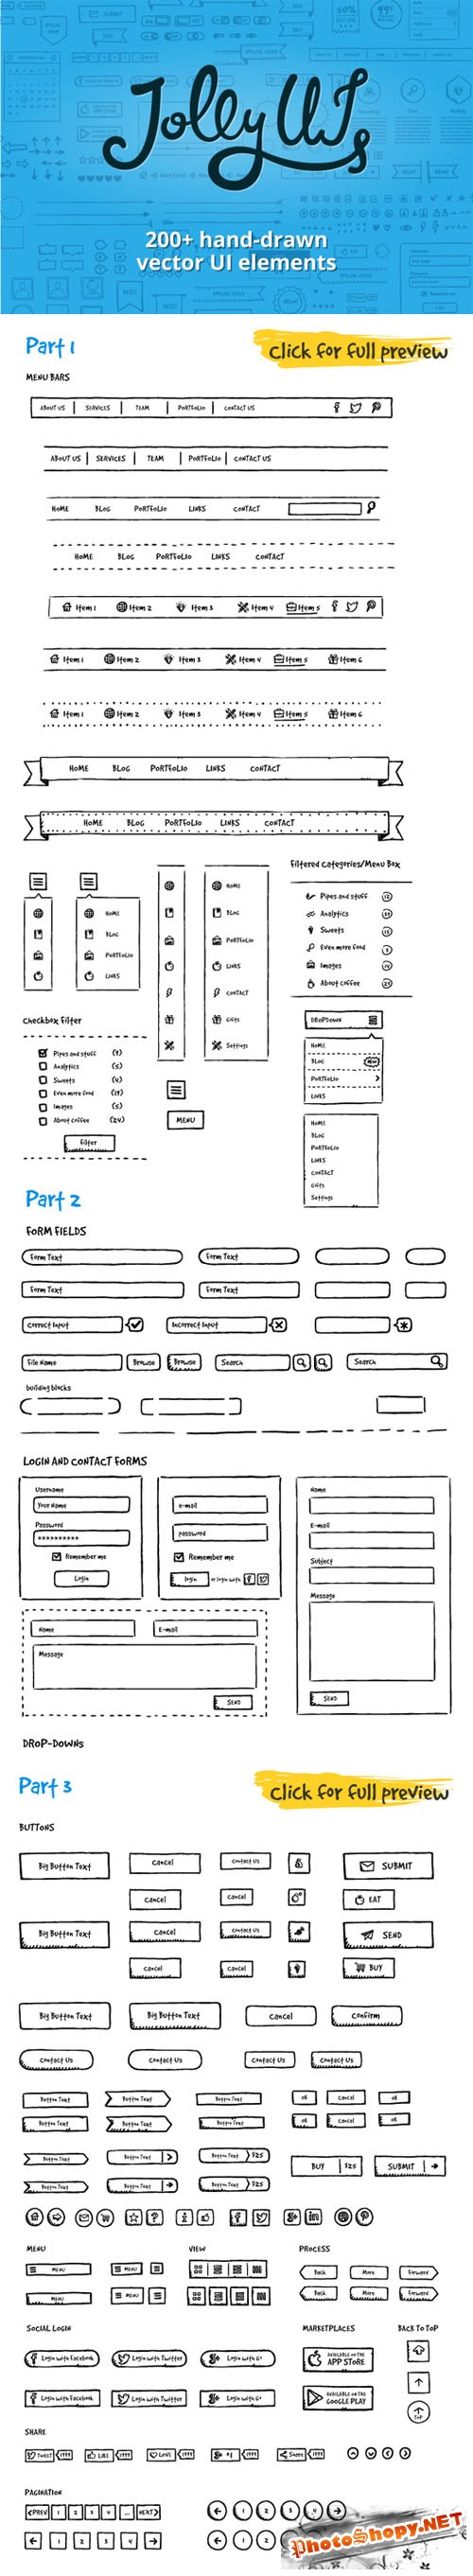 Jolly UI Kit: Hand-drawn UI elements - CM 23094